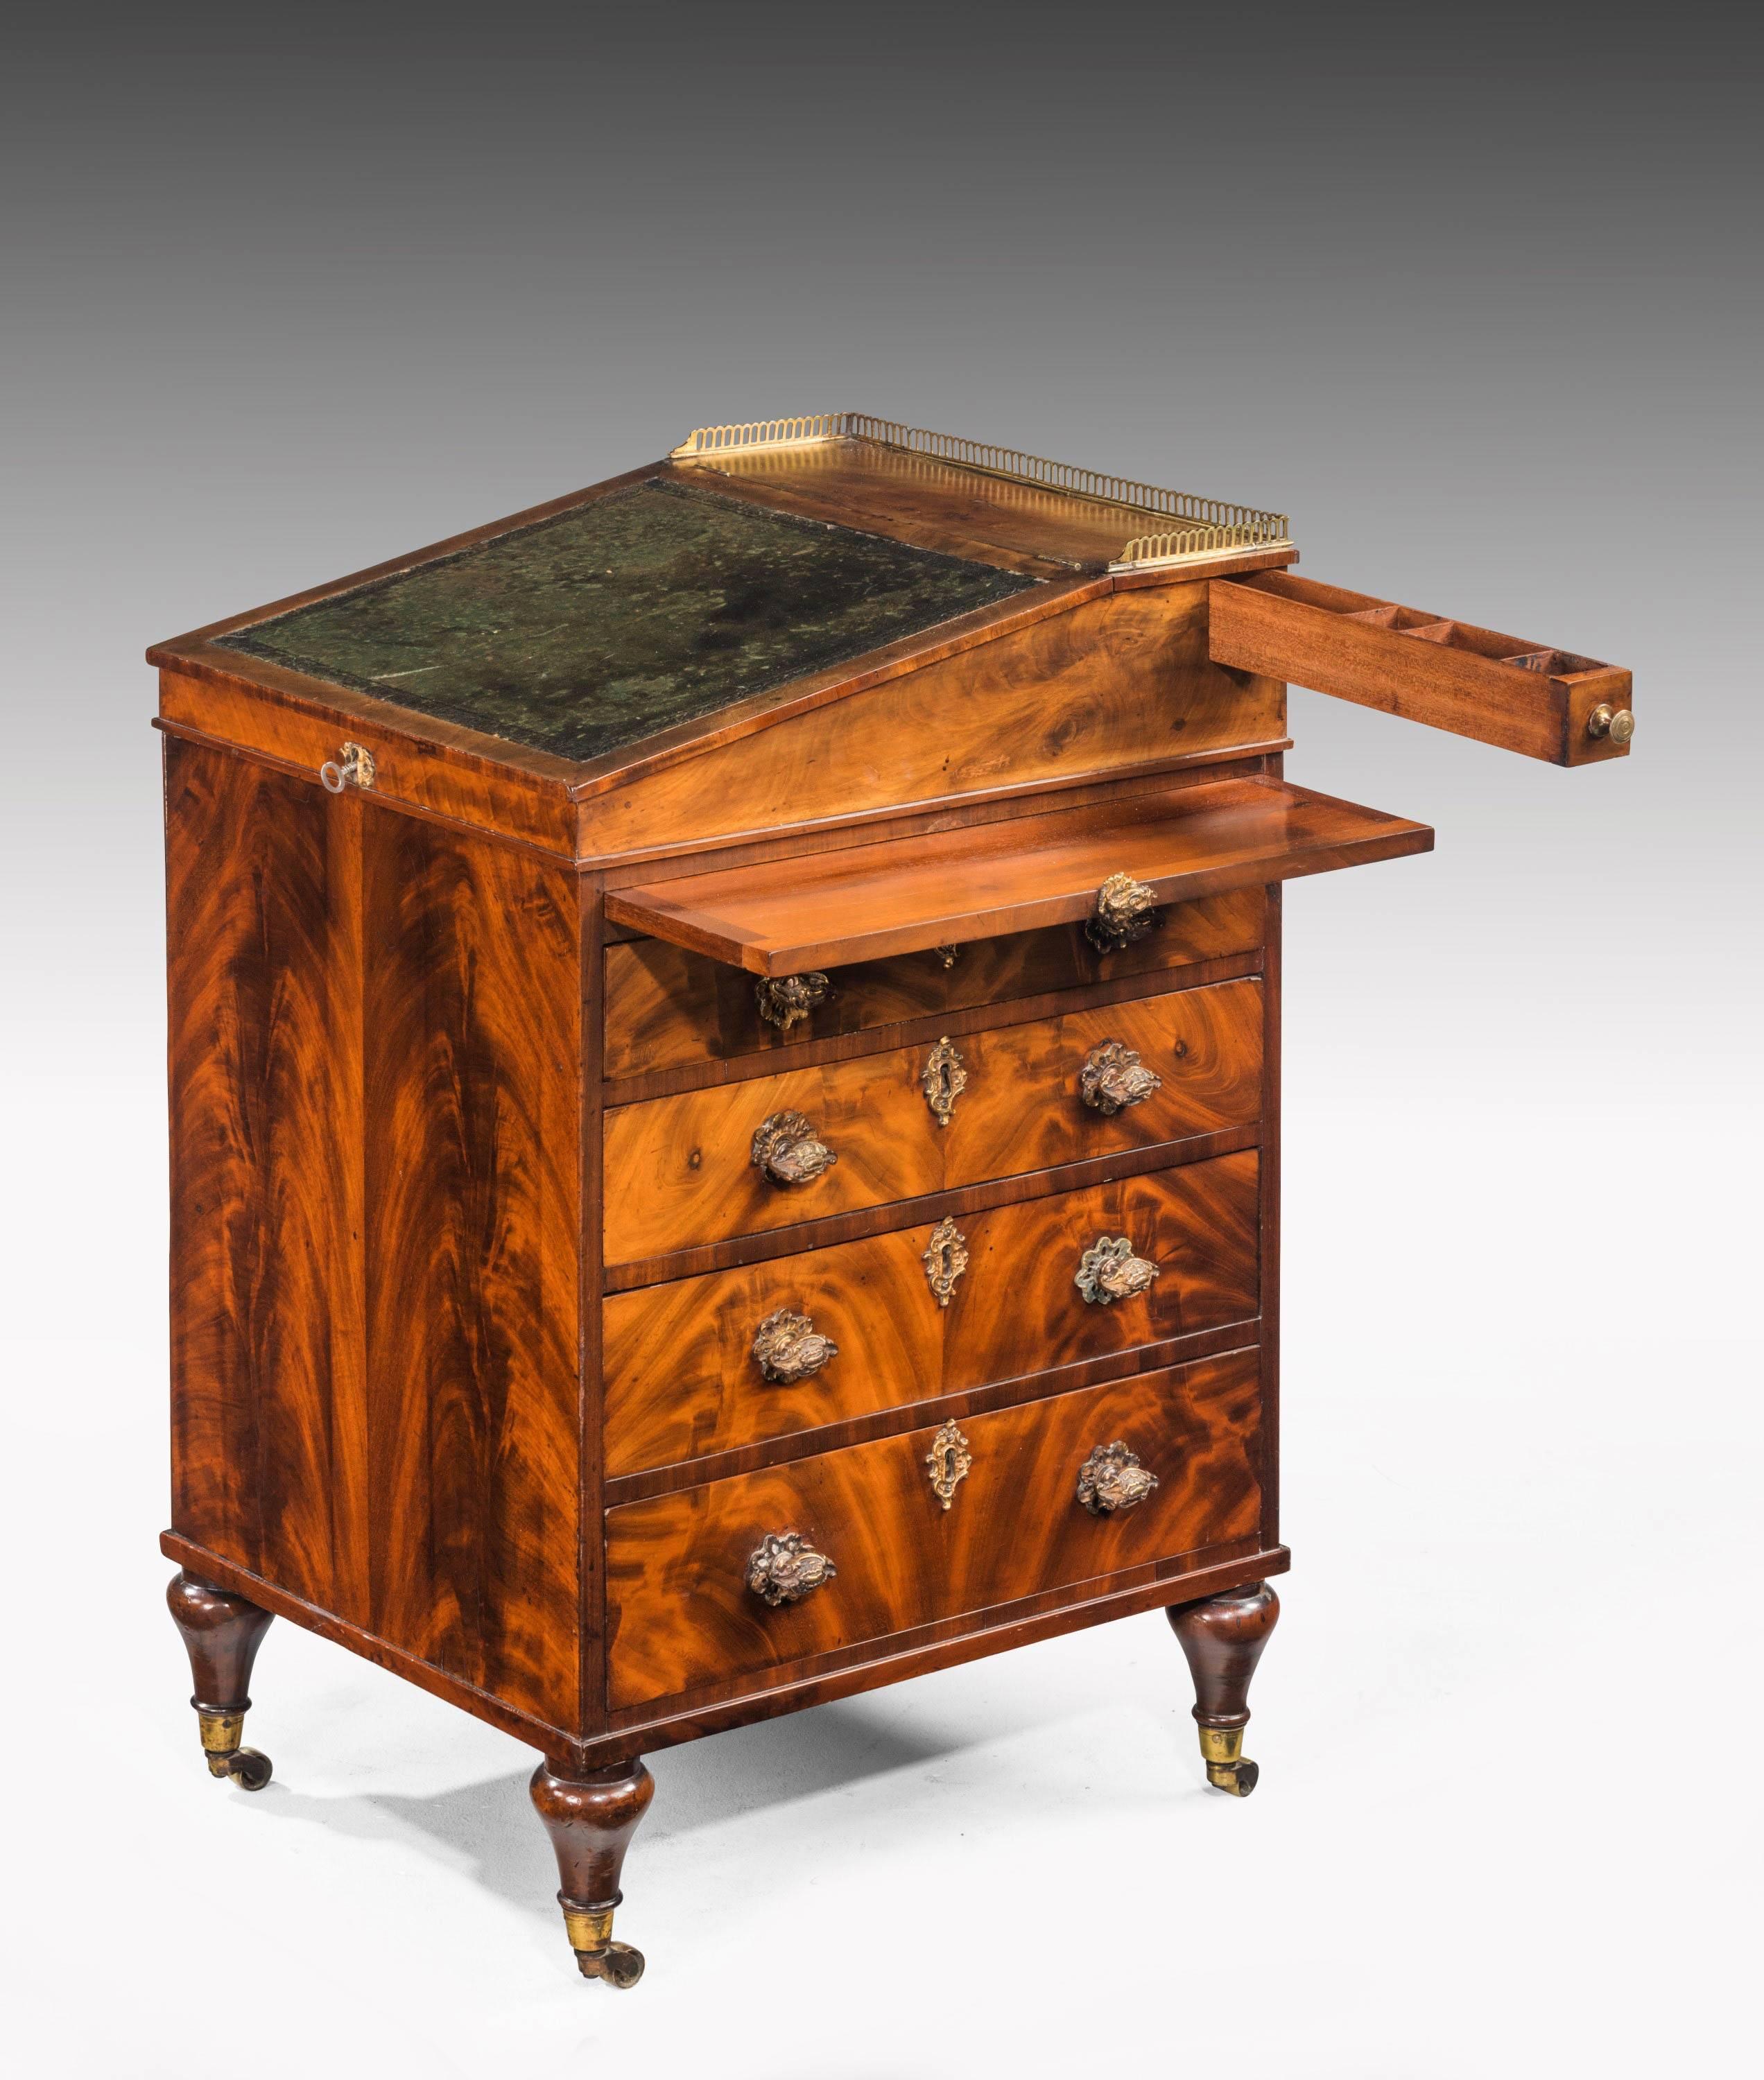 English Regency Period Mahogany Davenport Desk of Quite Exceptional Quality